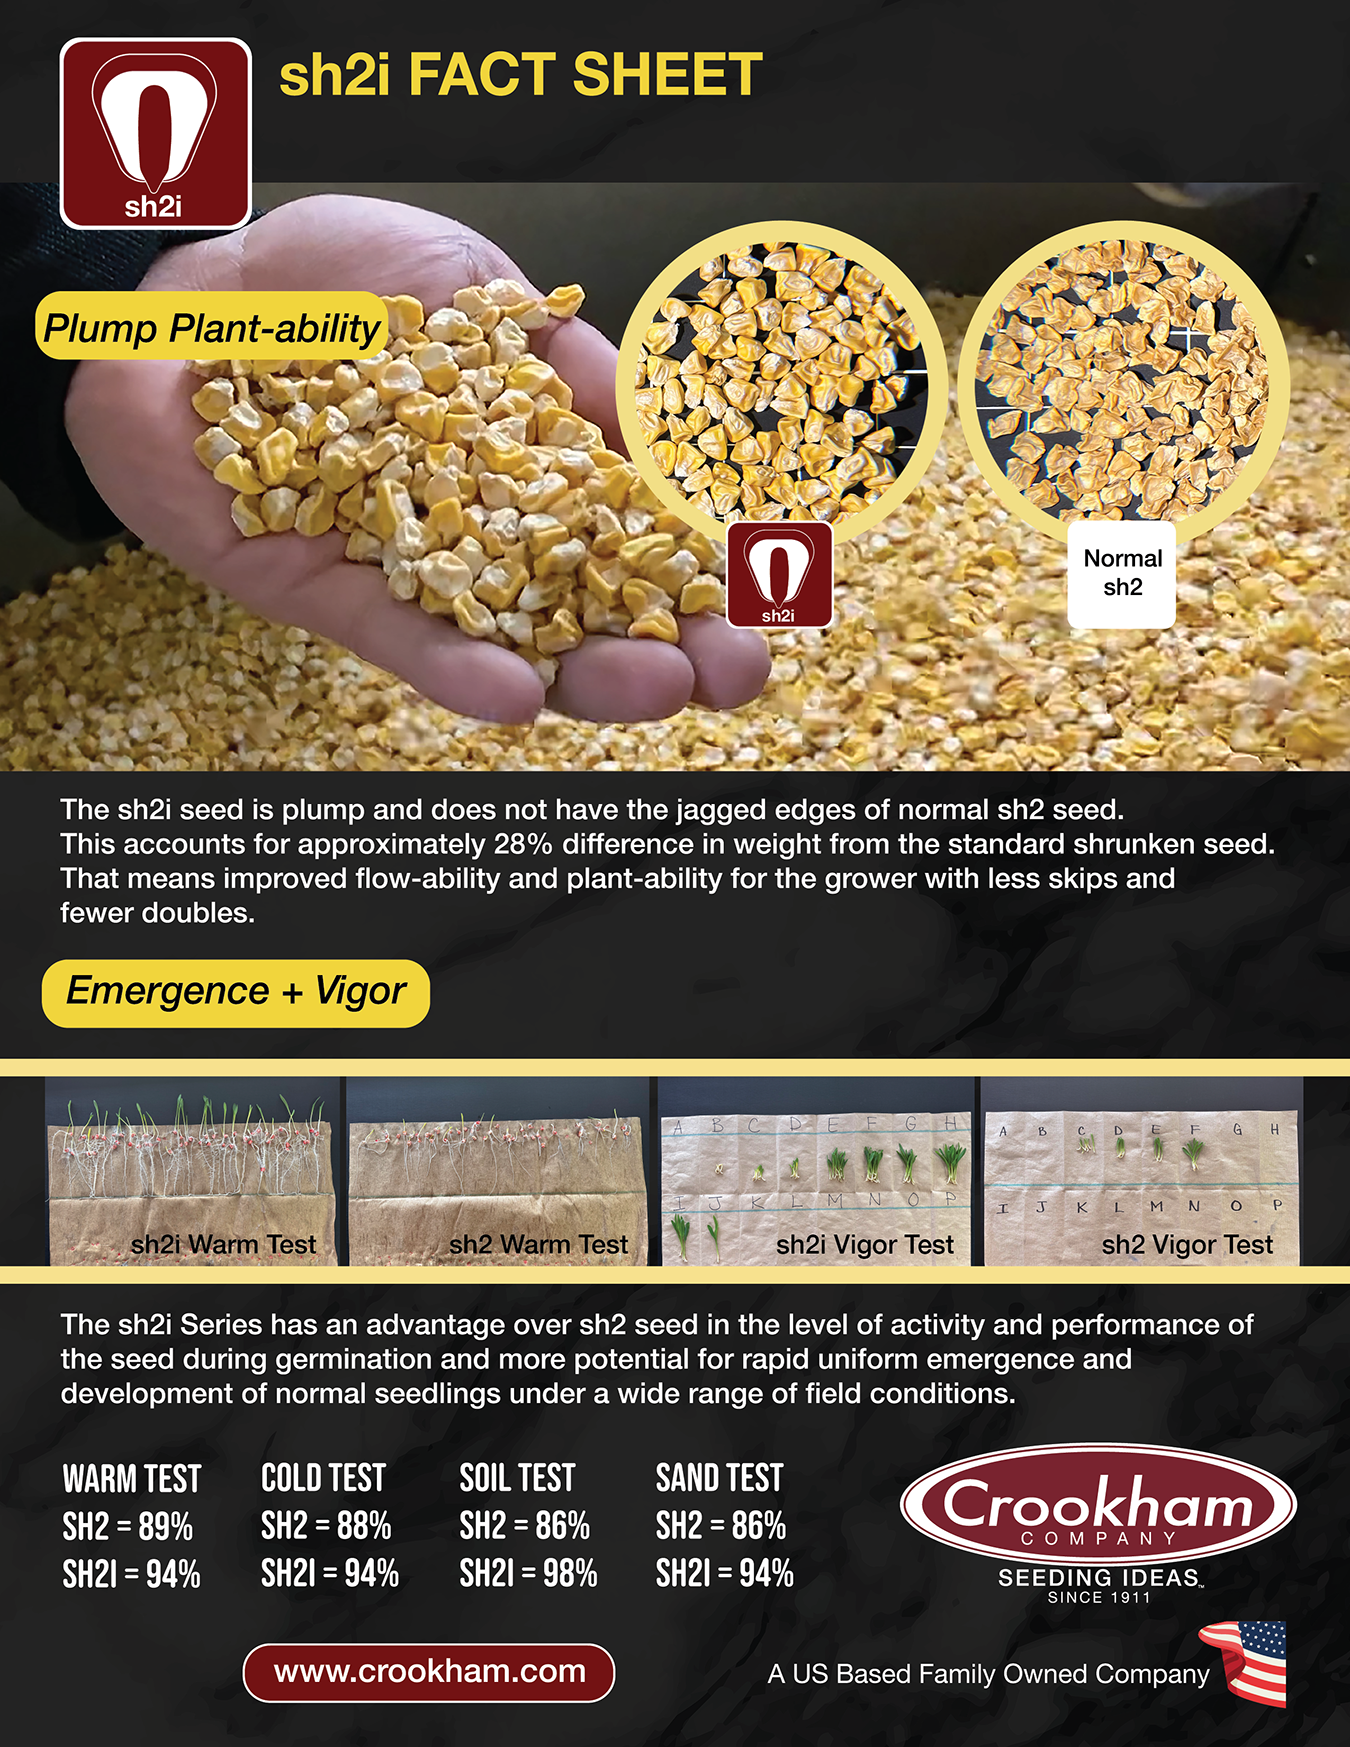 sh2i Fact Sheet Crookham Sweet Corn Seed